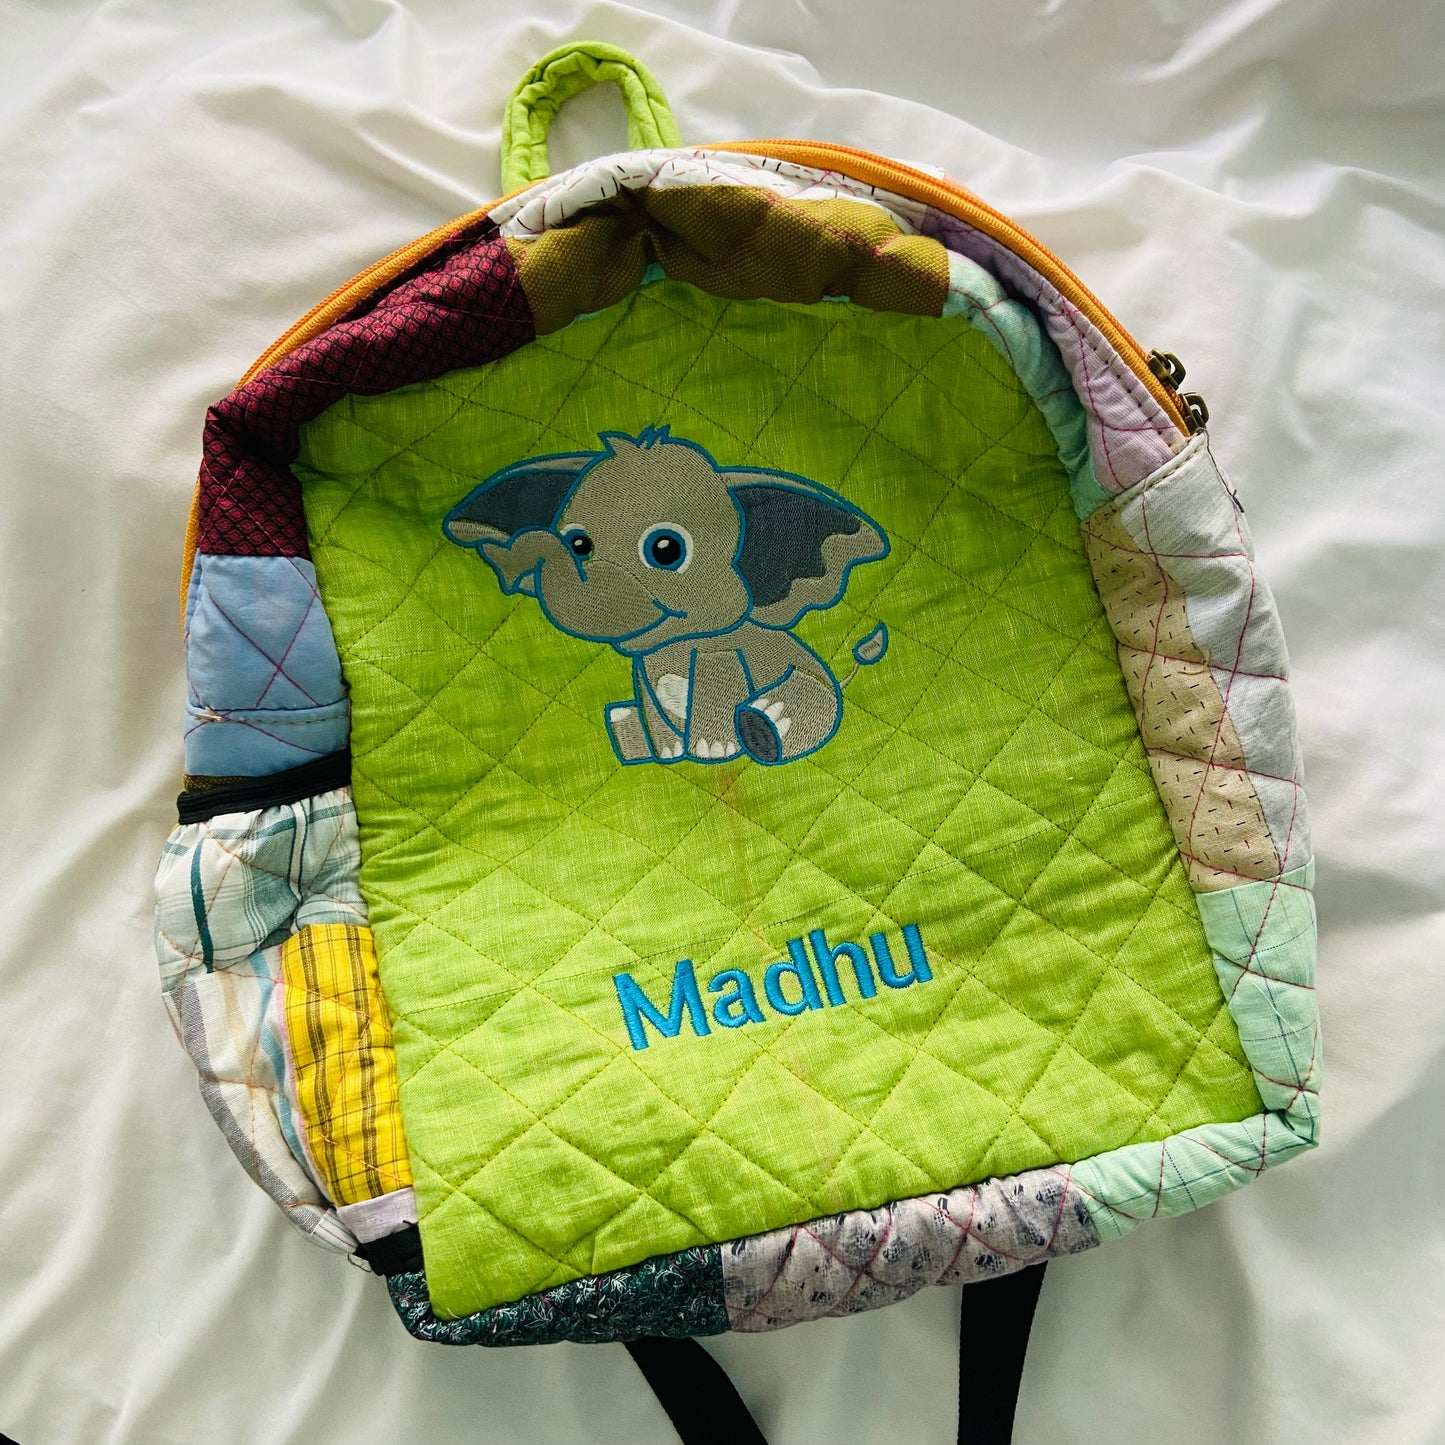 Customised Backpack for Kids - Sitting Baby Elephant